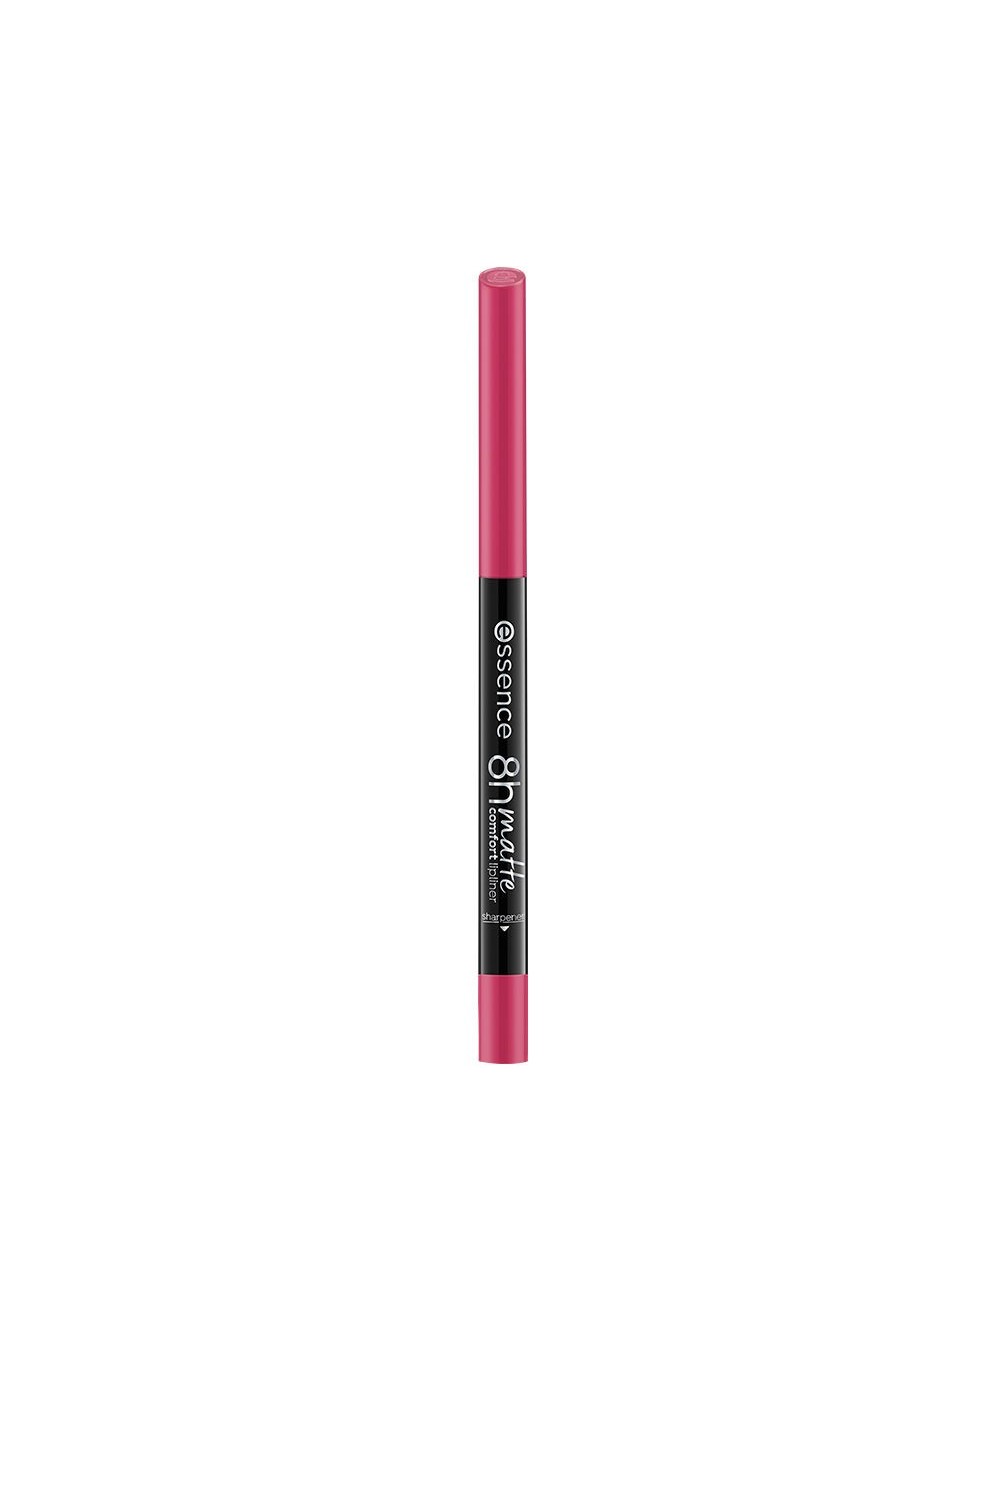 Essence Cosmetics Matte Comfort Perfilador De Labios 05-Pink Blush 0,3g